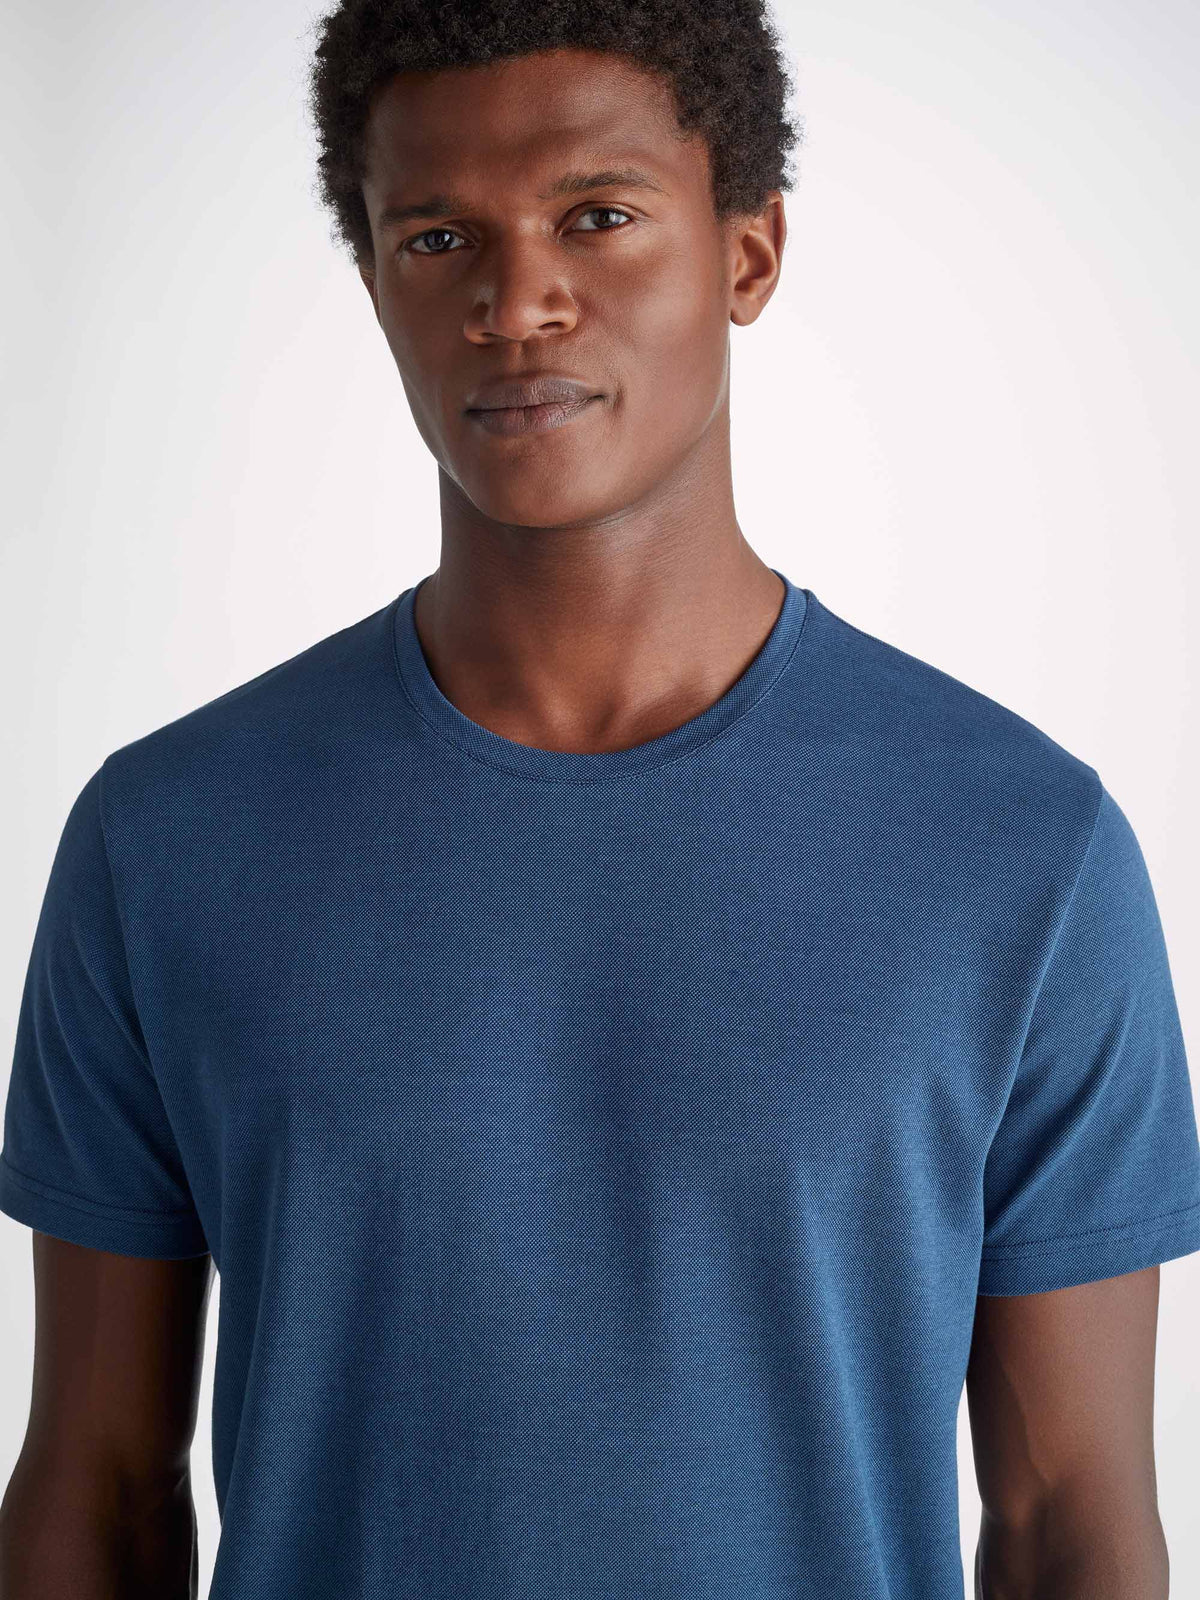 Men's T-Shirt Ramsay Pique Cotton Tencel Denim